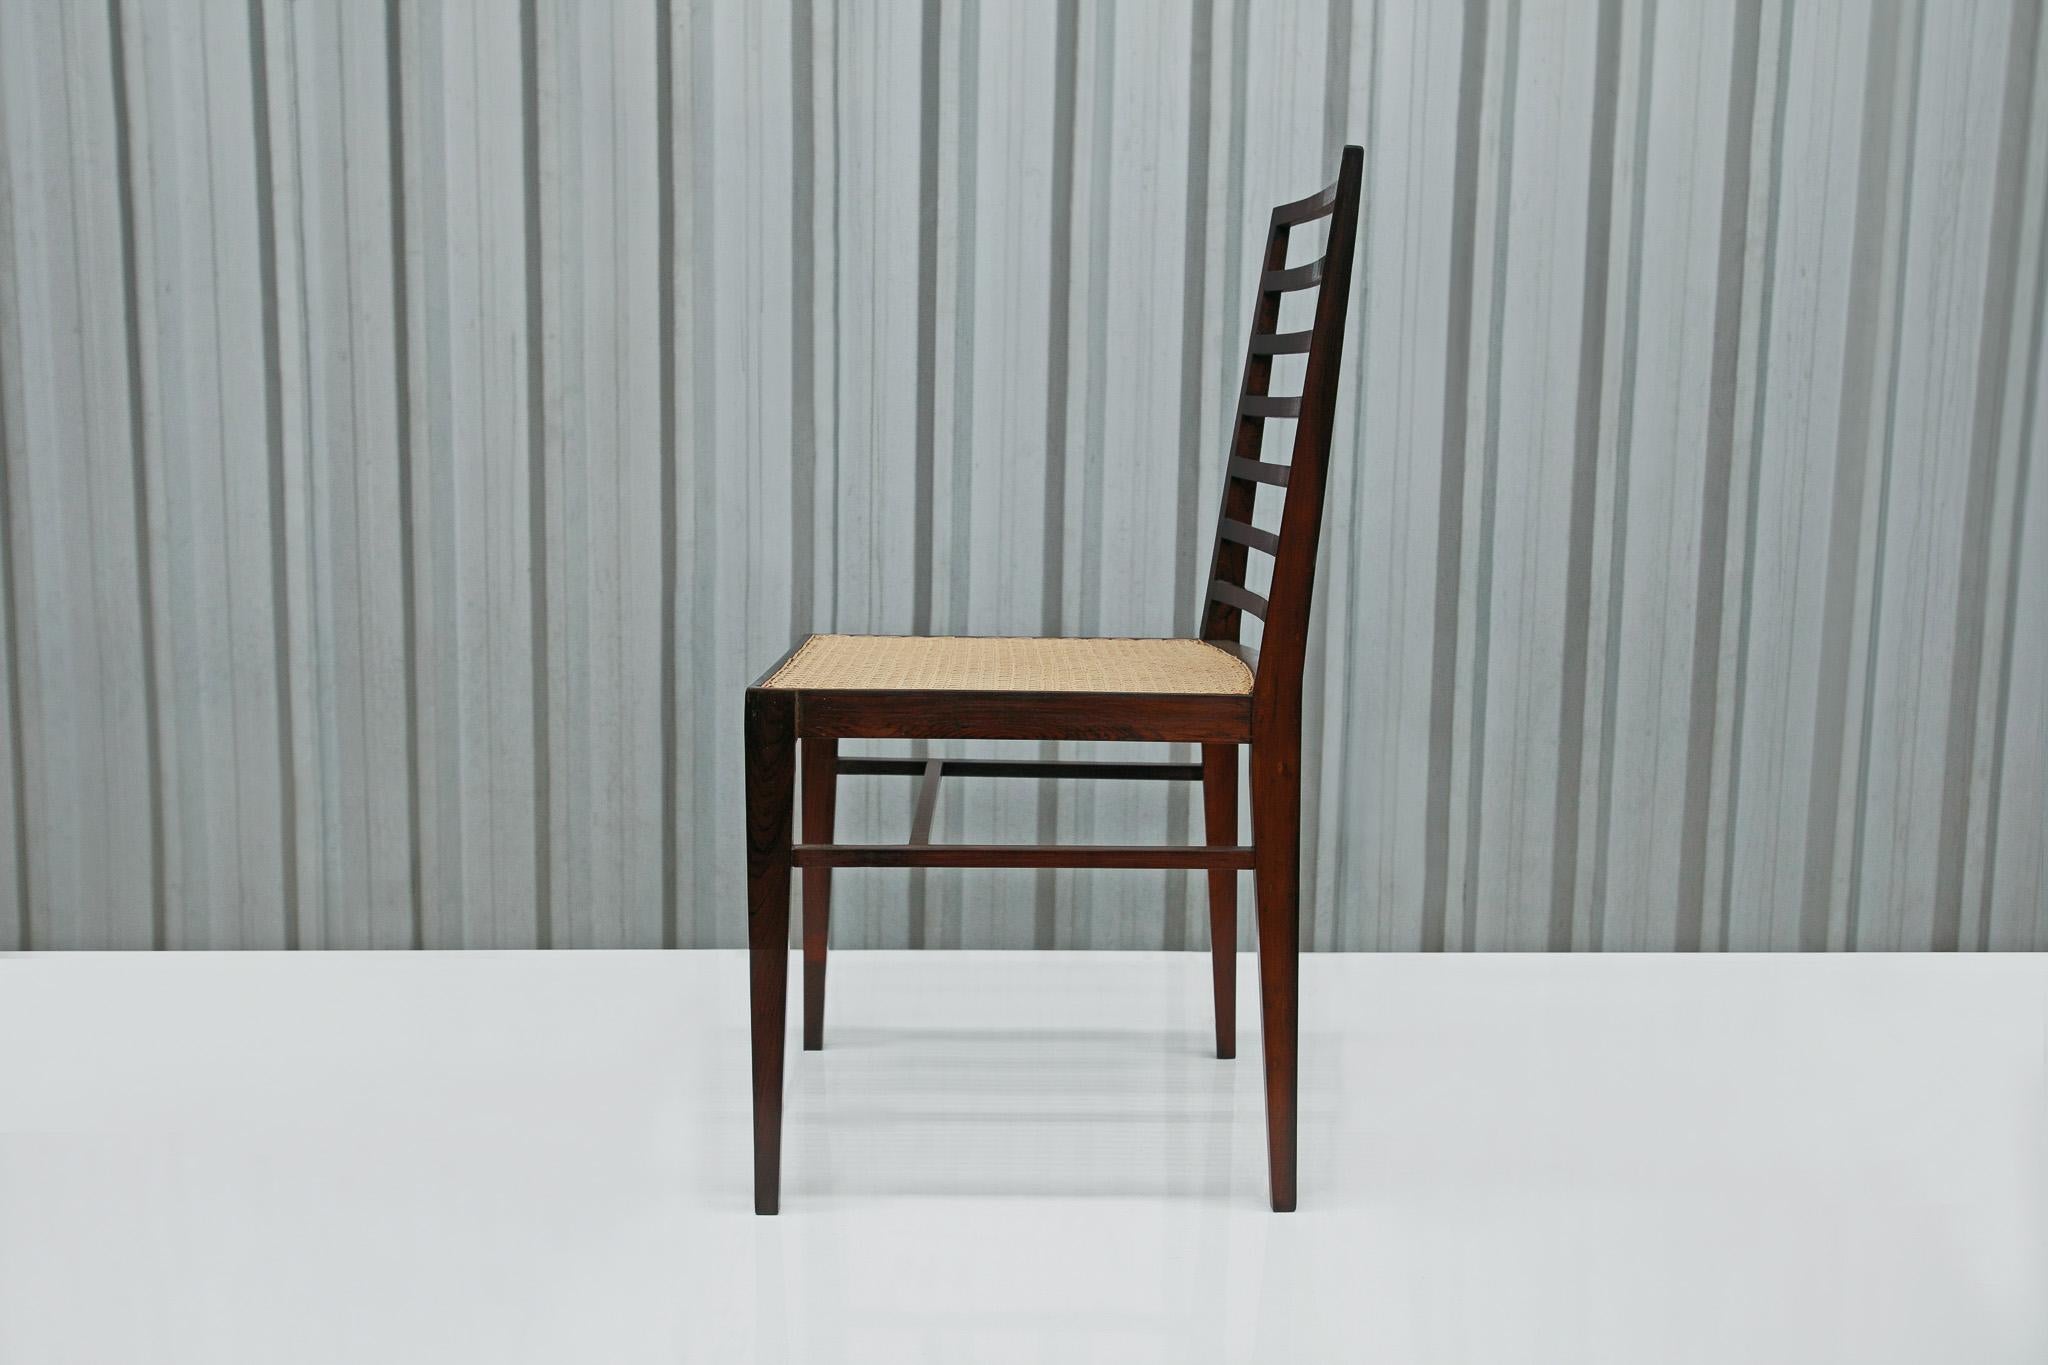 Woodwork Brazilian Modern 4 Chair Set in Hardwood & Cane, Joaquim Tenreiro, Brazil, 1950s For Sale